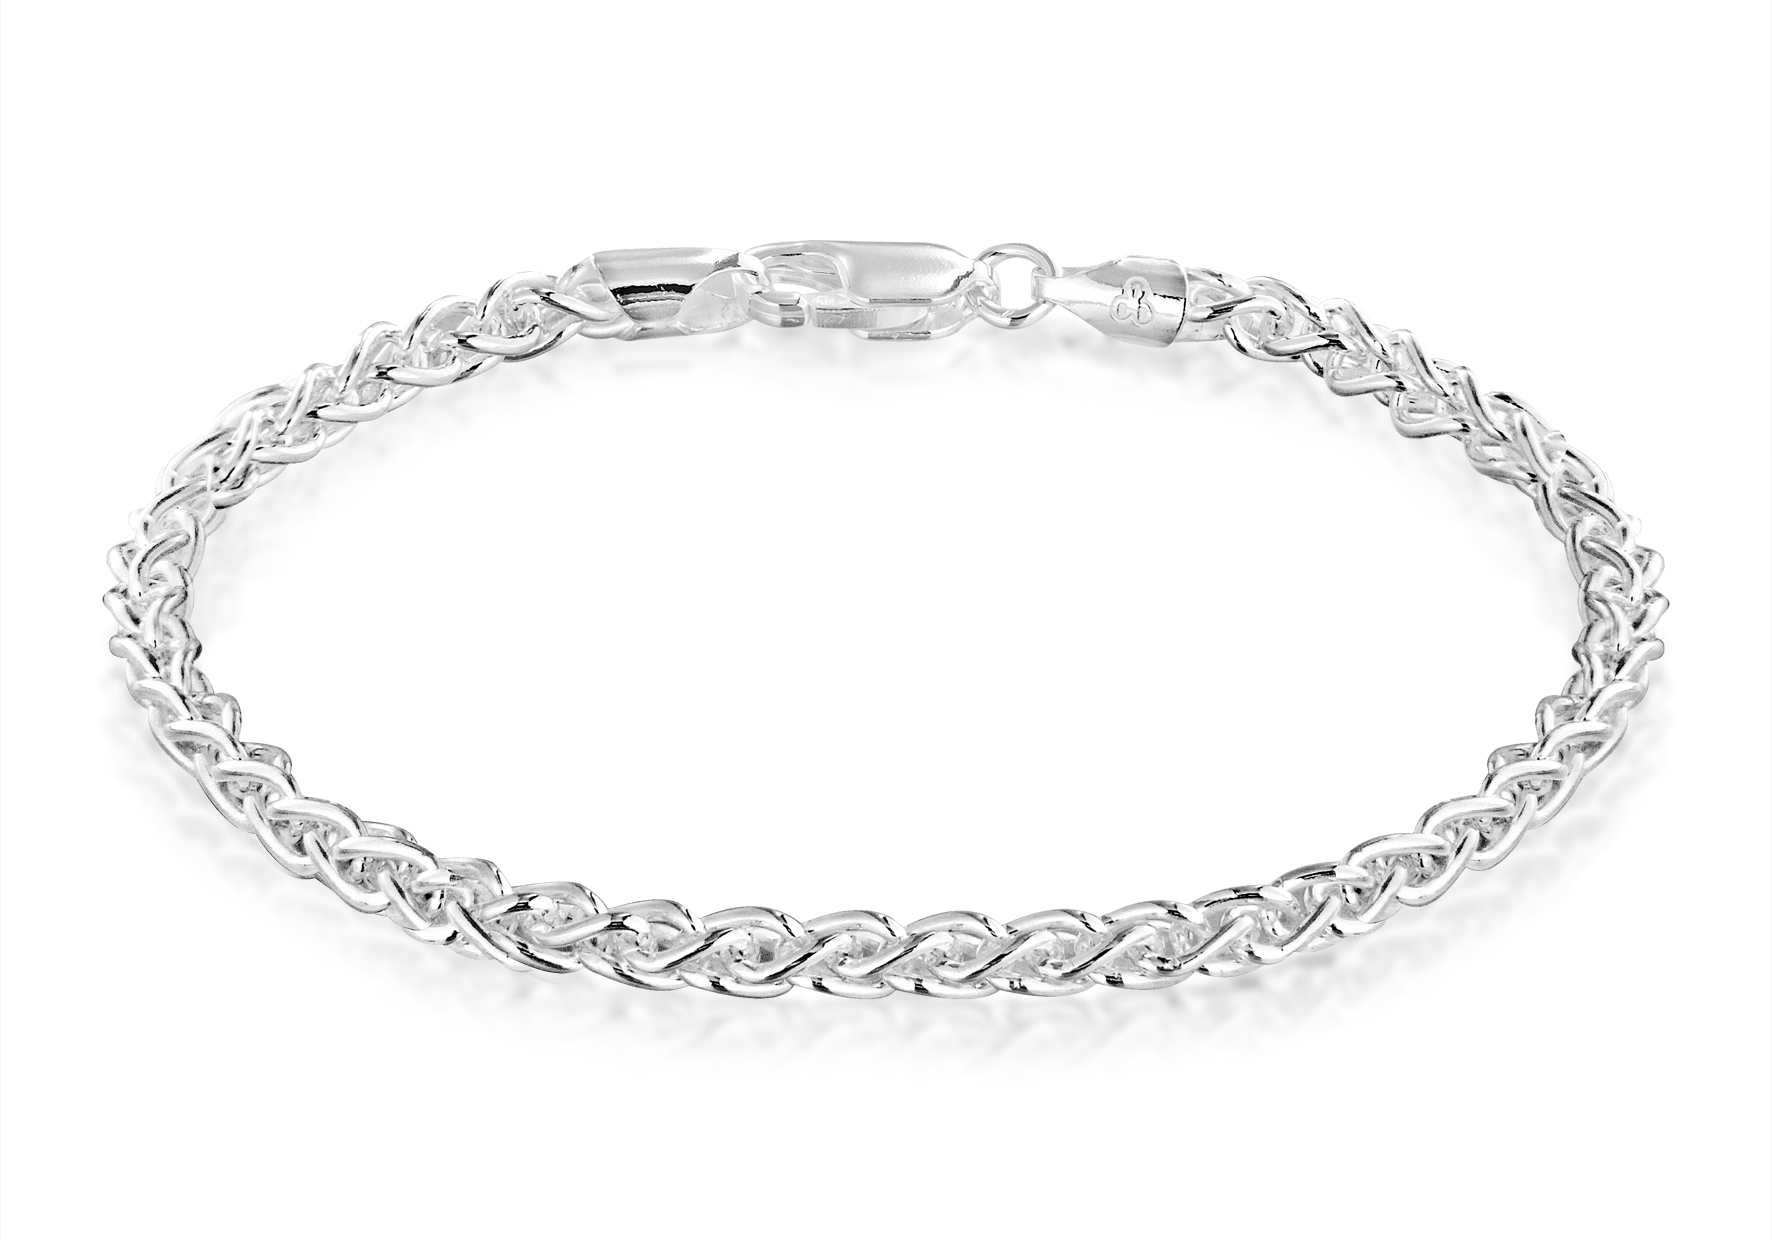 Tuscany Silver Fine Necklace Bracelet Anklet Argent 925/1000 Rond 46 Centimeters